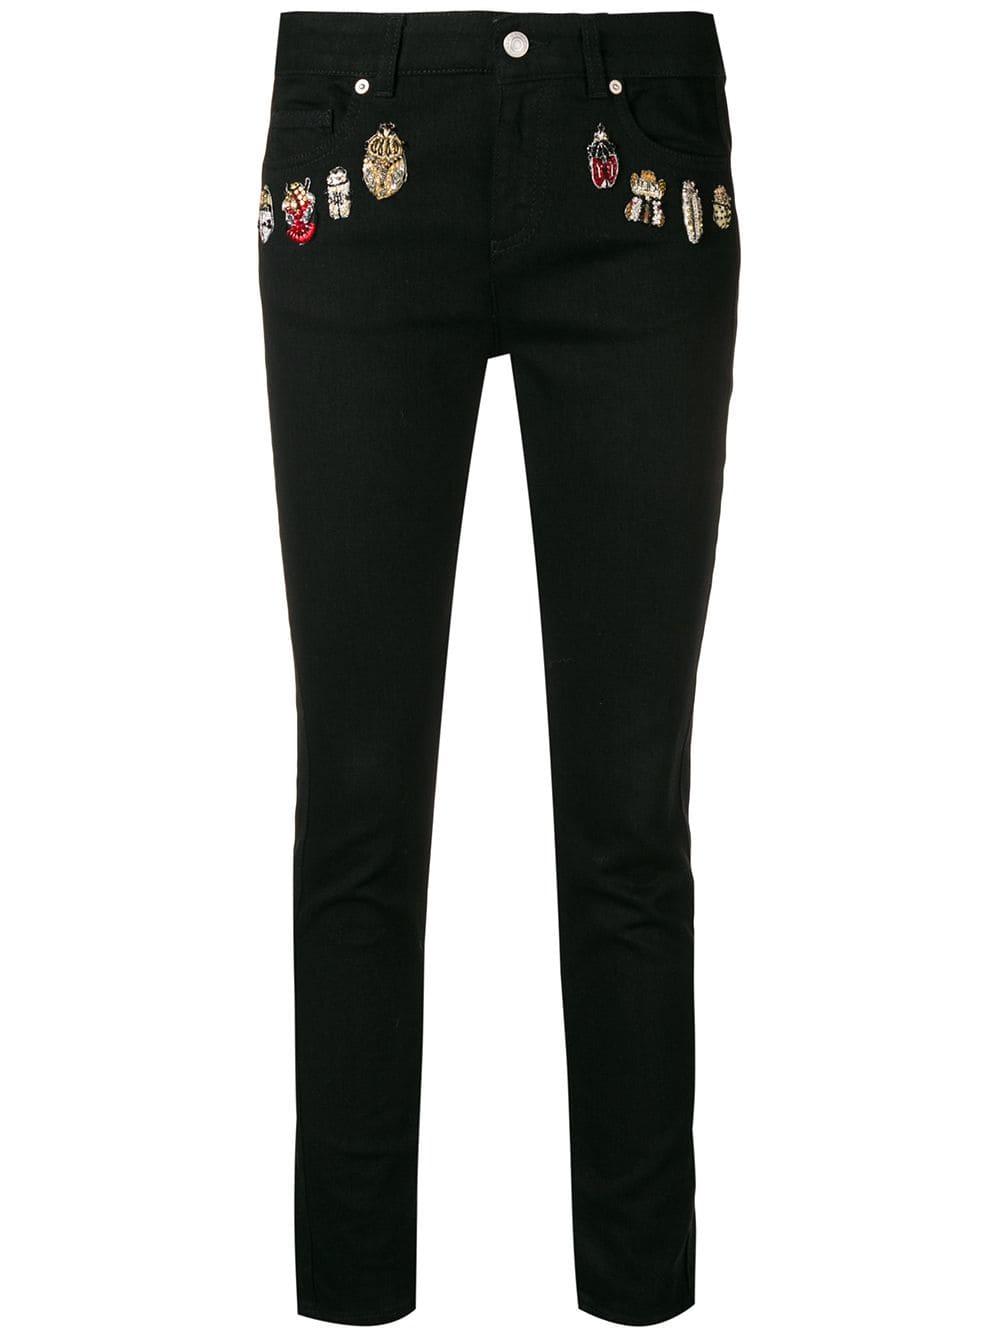 Alexander McQueen Denim Embroidered Details Skinny Jeans in Black - Lyst